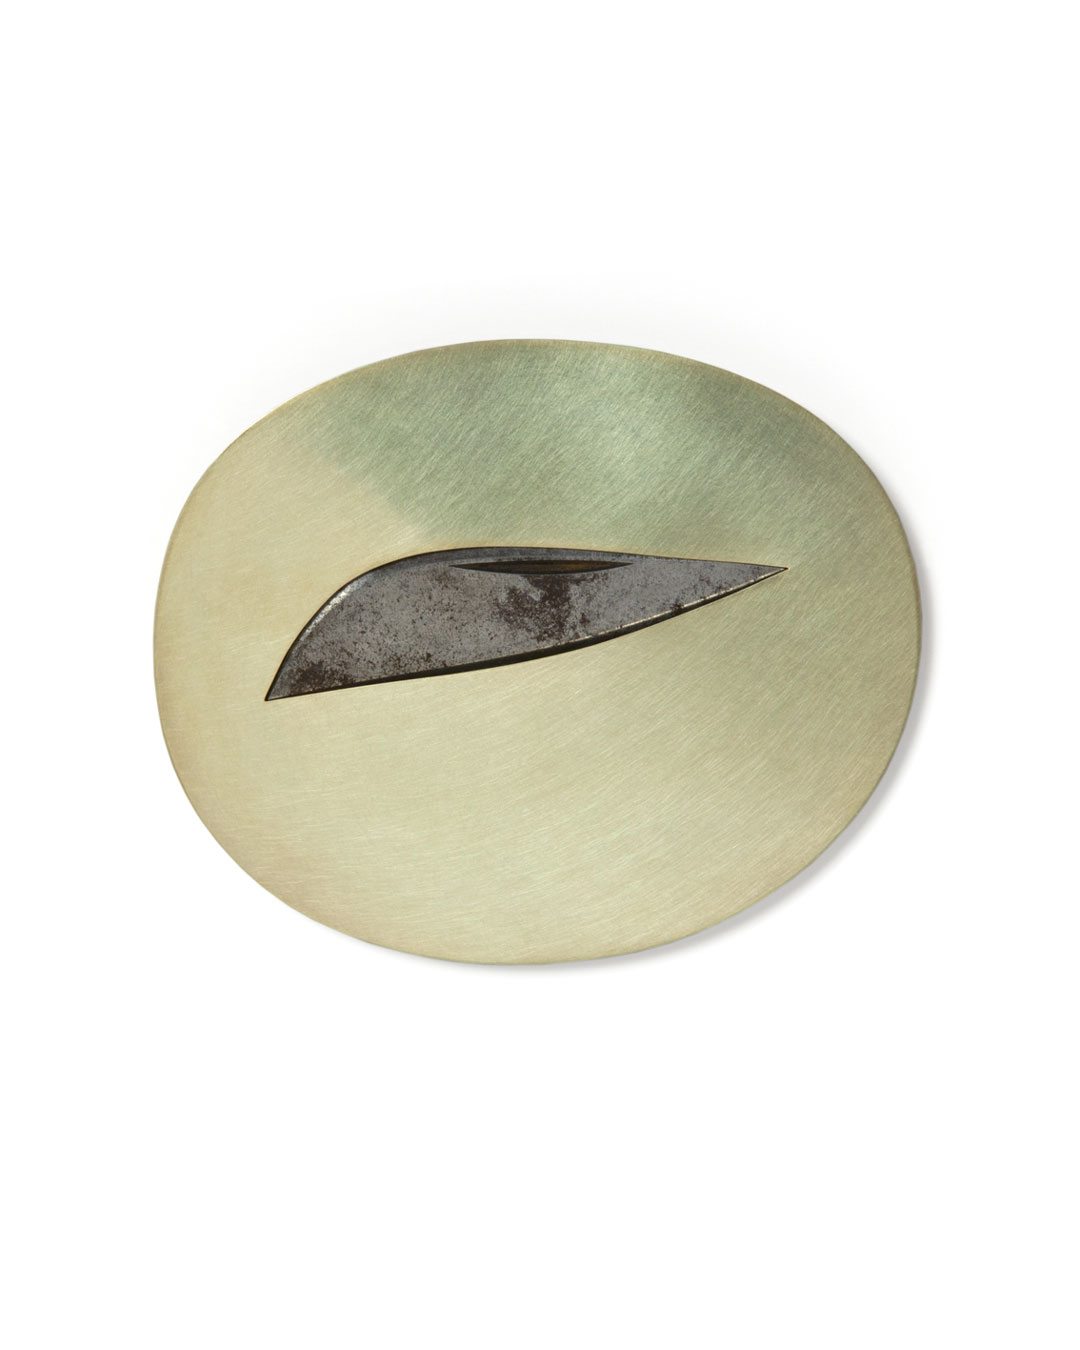 Otto Künzli, Auge XIV (Eye XIV), 2017, brooch; gold, iron (garden knife), Corian, 80 x 97 x 6 mm, price on request